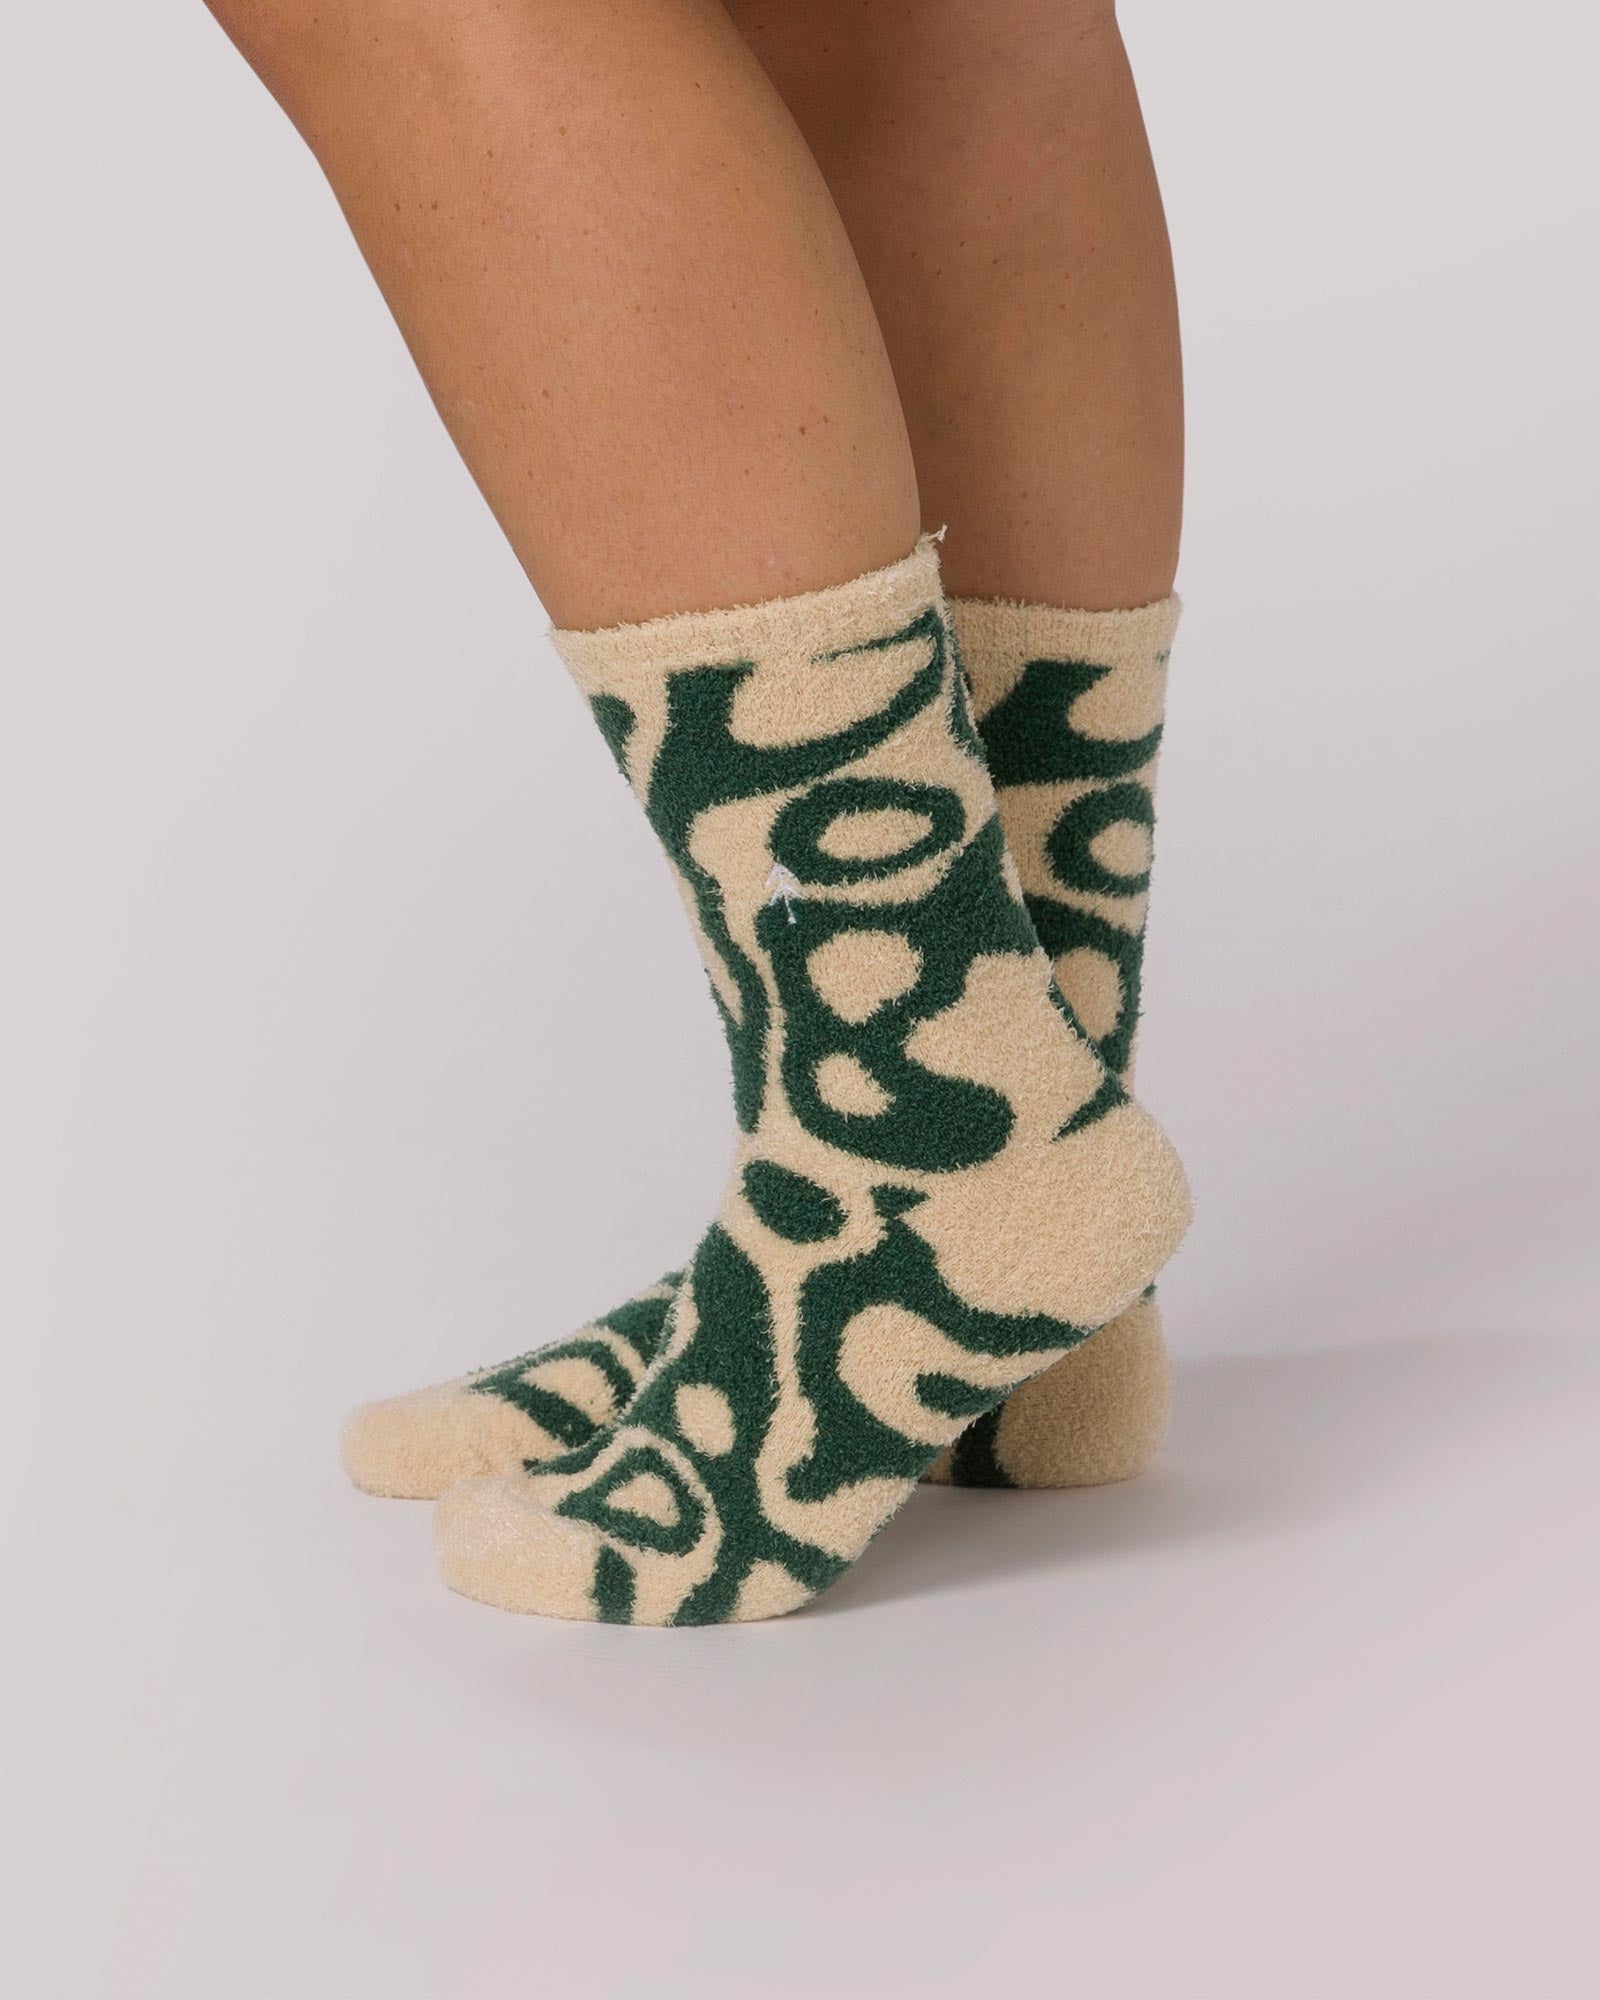 Yellowstone Geysers Cozy Socks